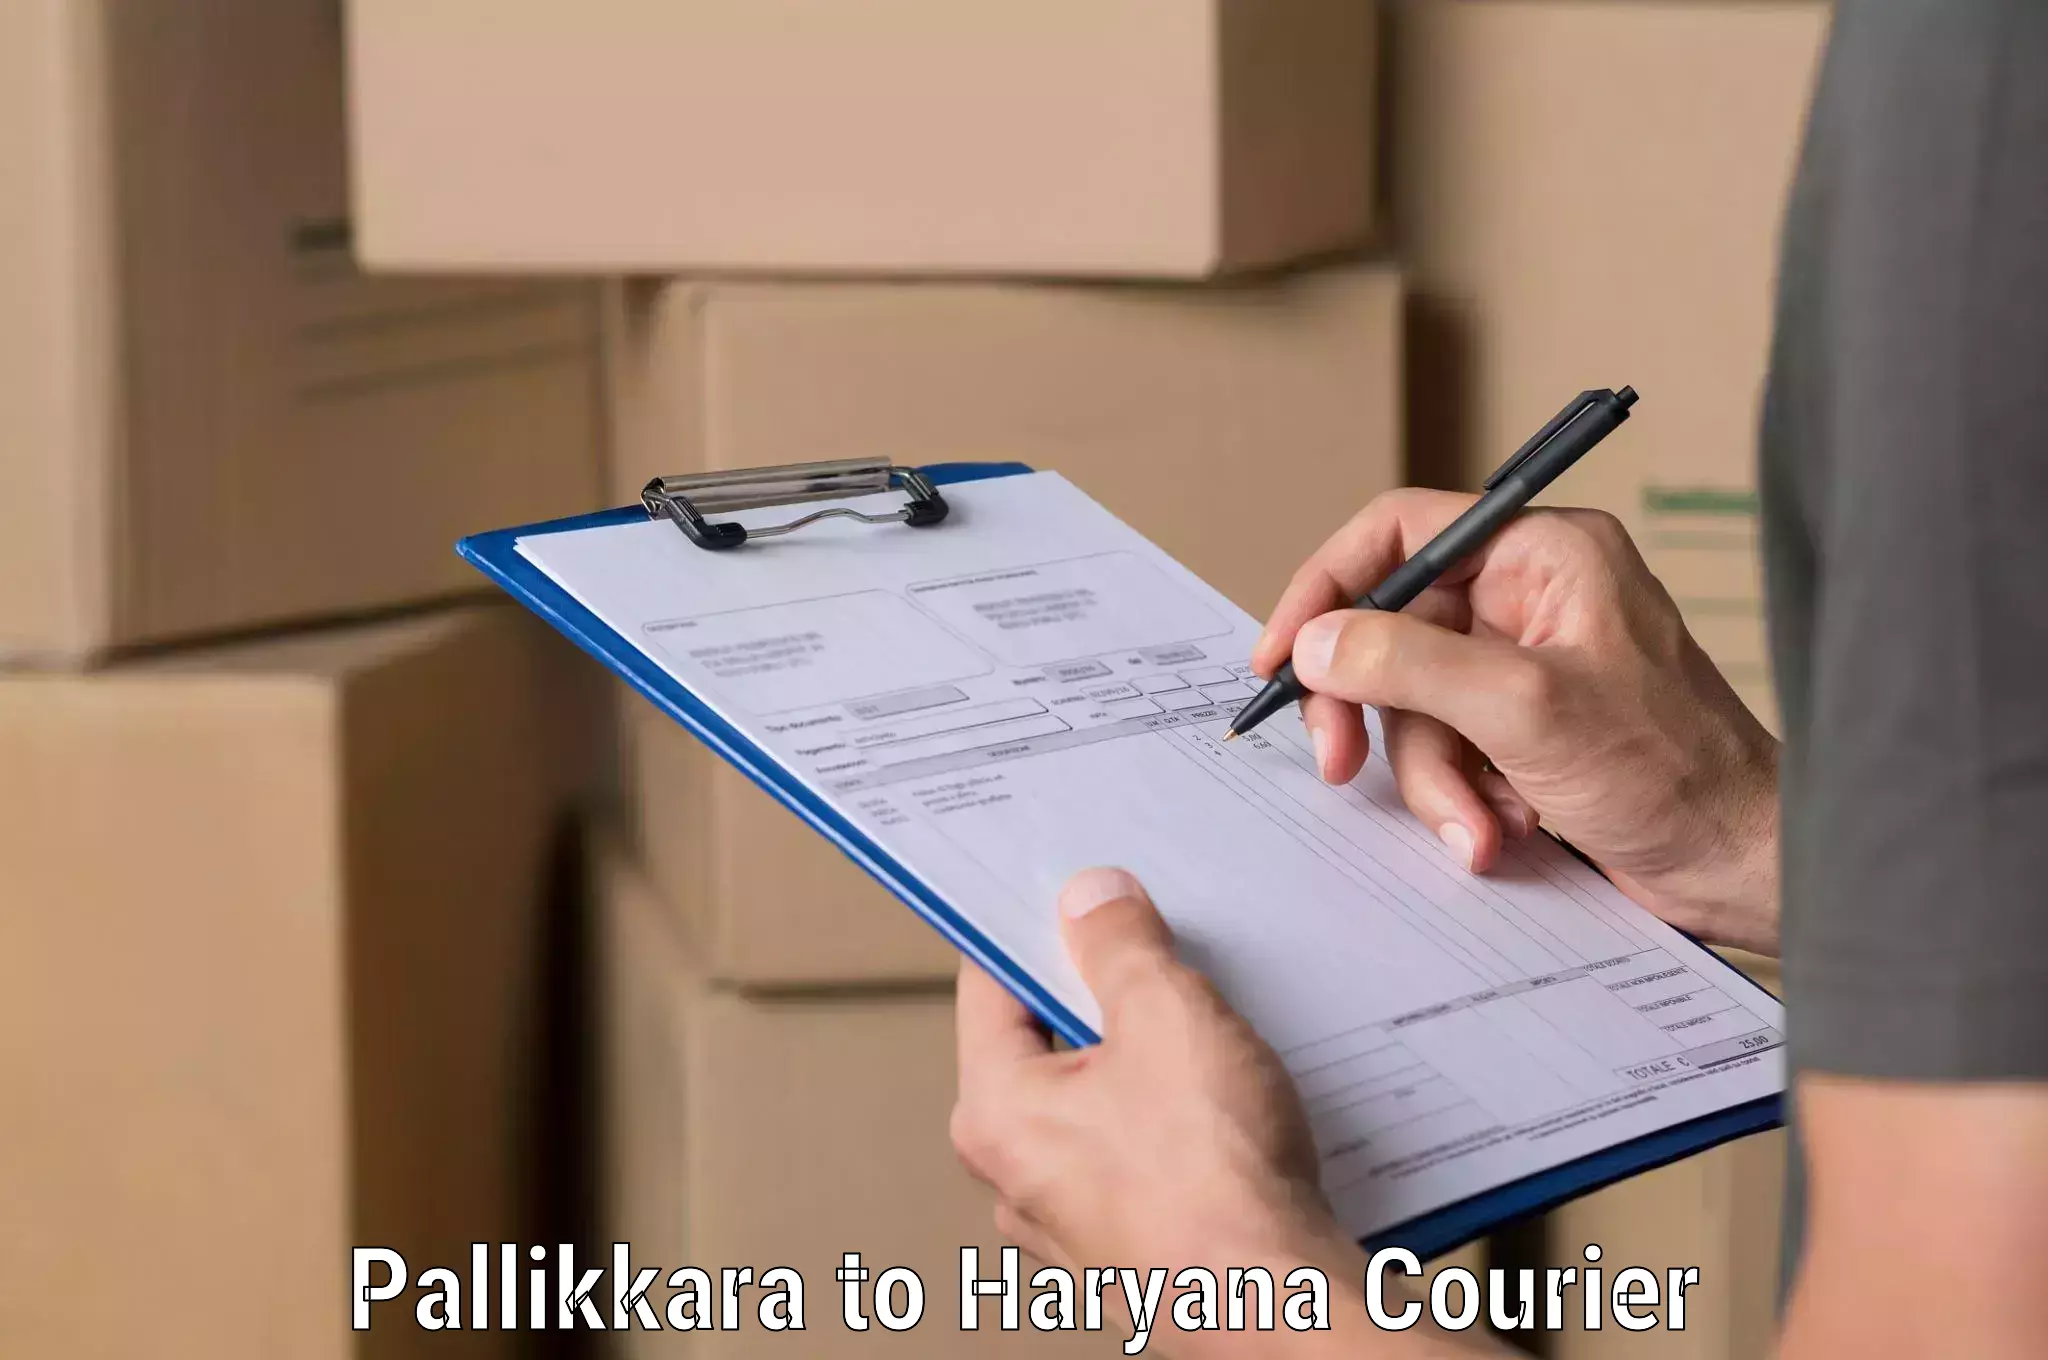 Express logistics service Pallikkara to Chirya